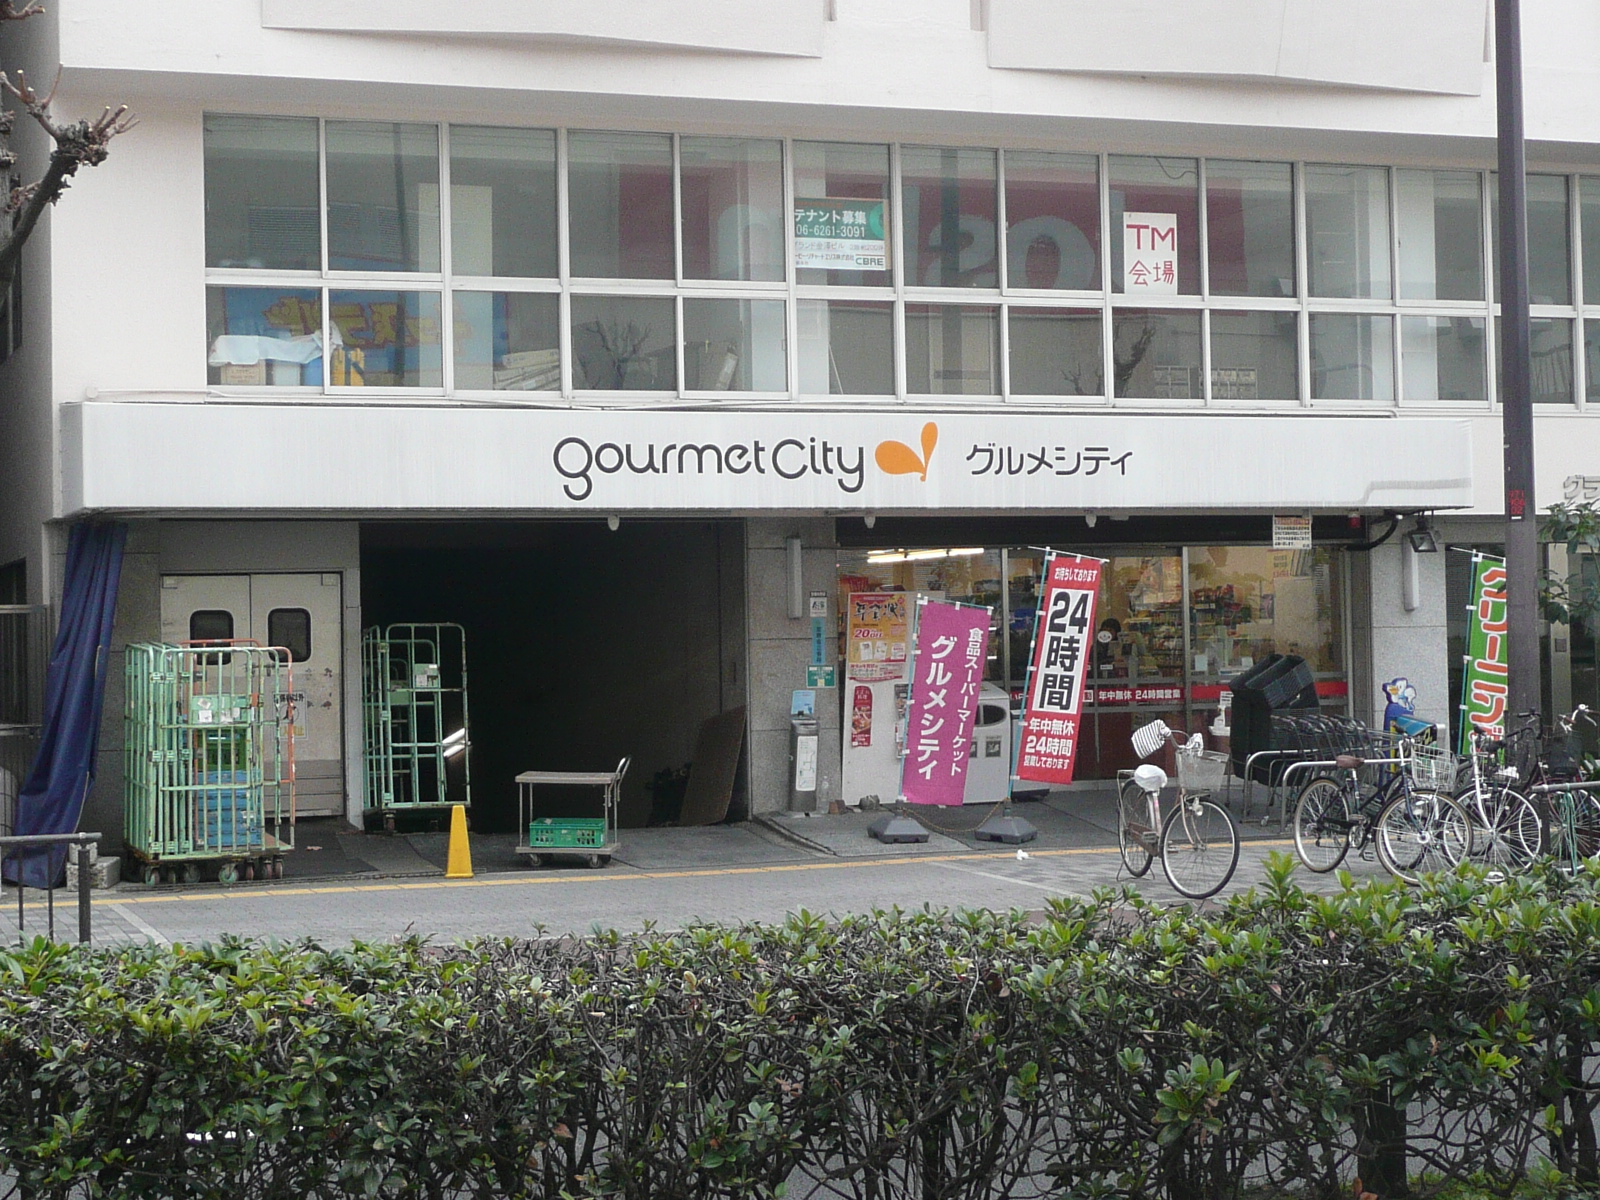 Supermarket. 419m until Gourmet City Shin-Osaka store (Super)